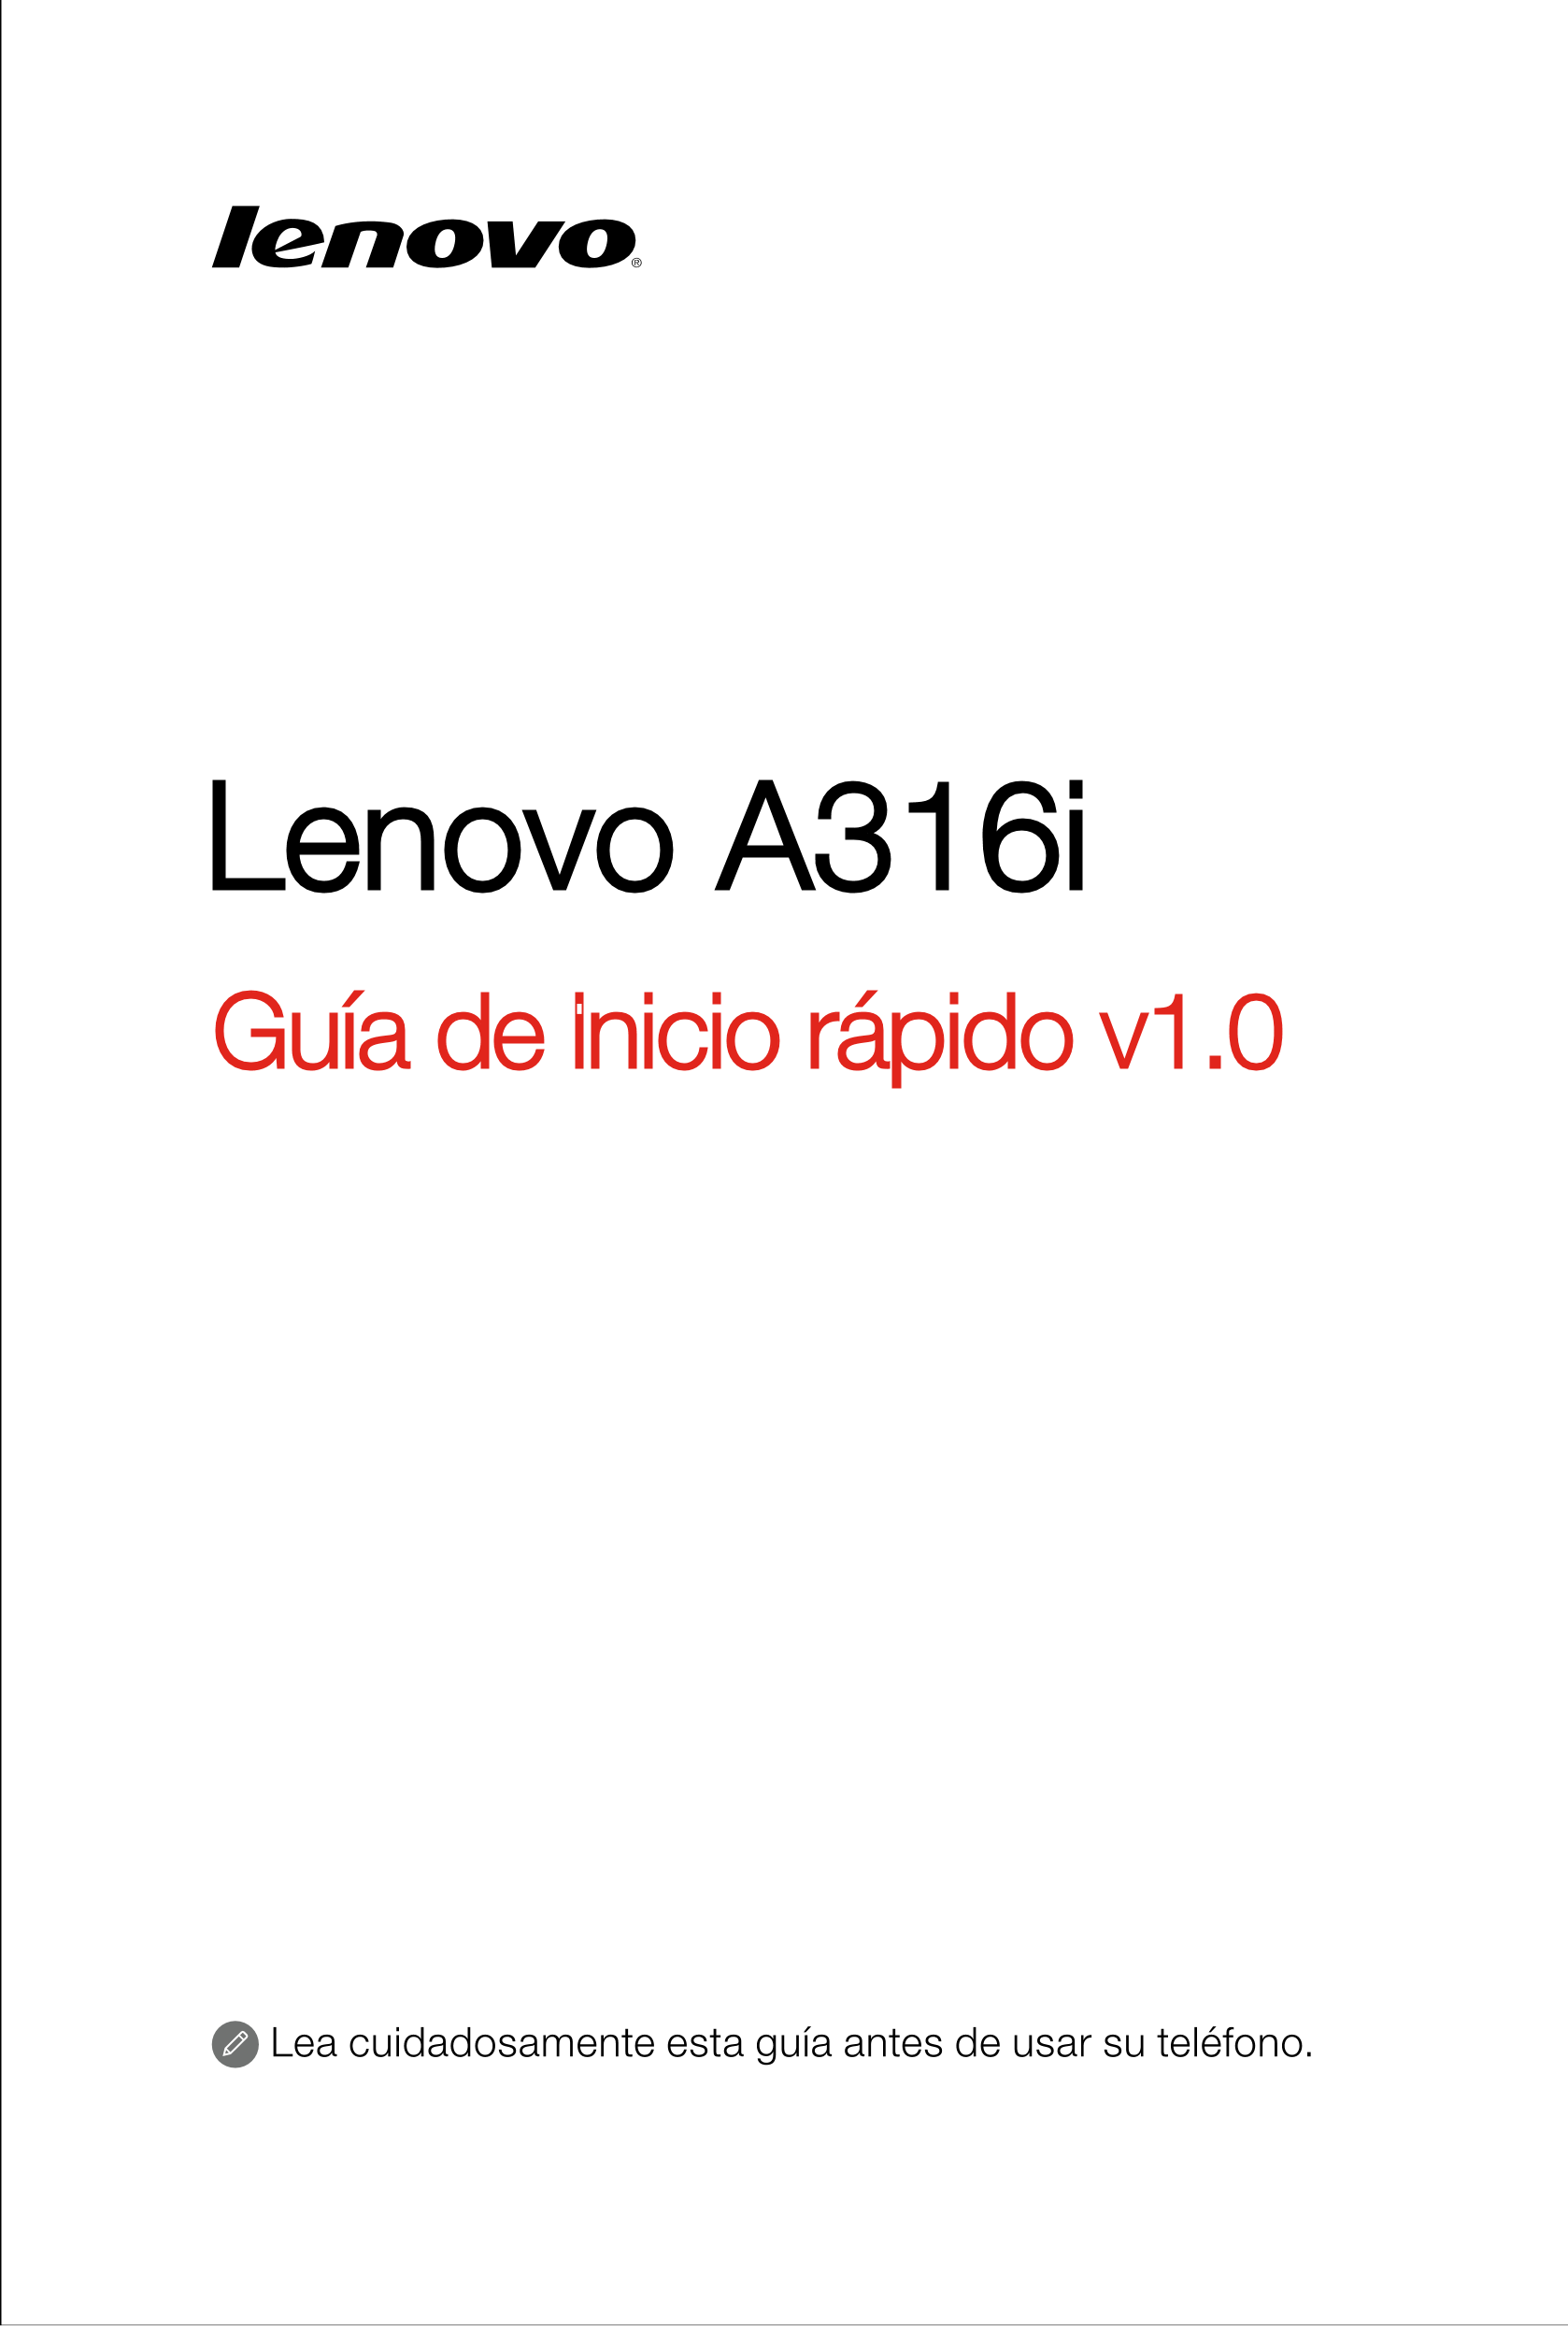 Lenovo A316i
Guía de inicio rápido v1.0
Lea cuidadosamente esta guía antes de usar su teléfono. 